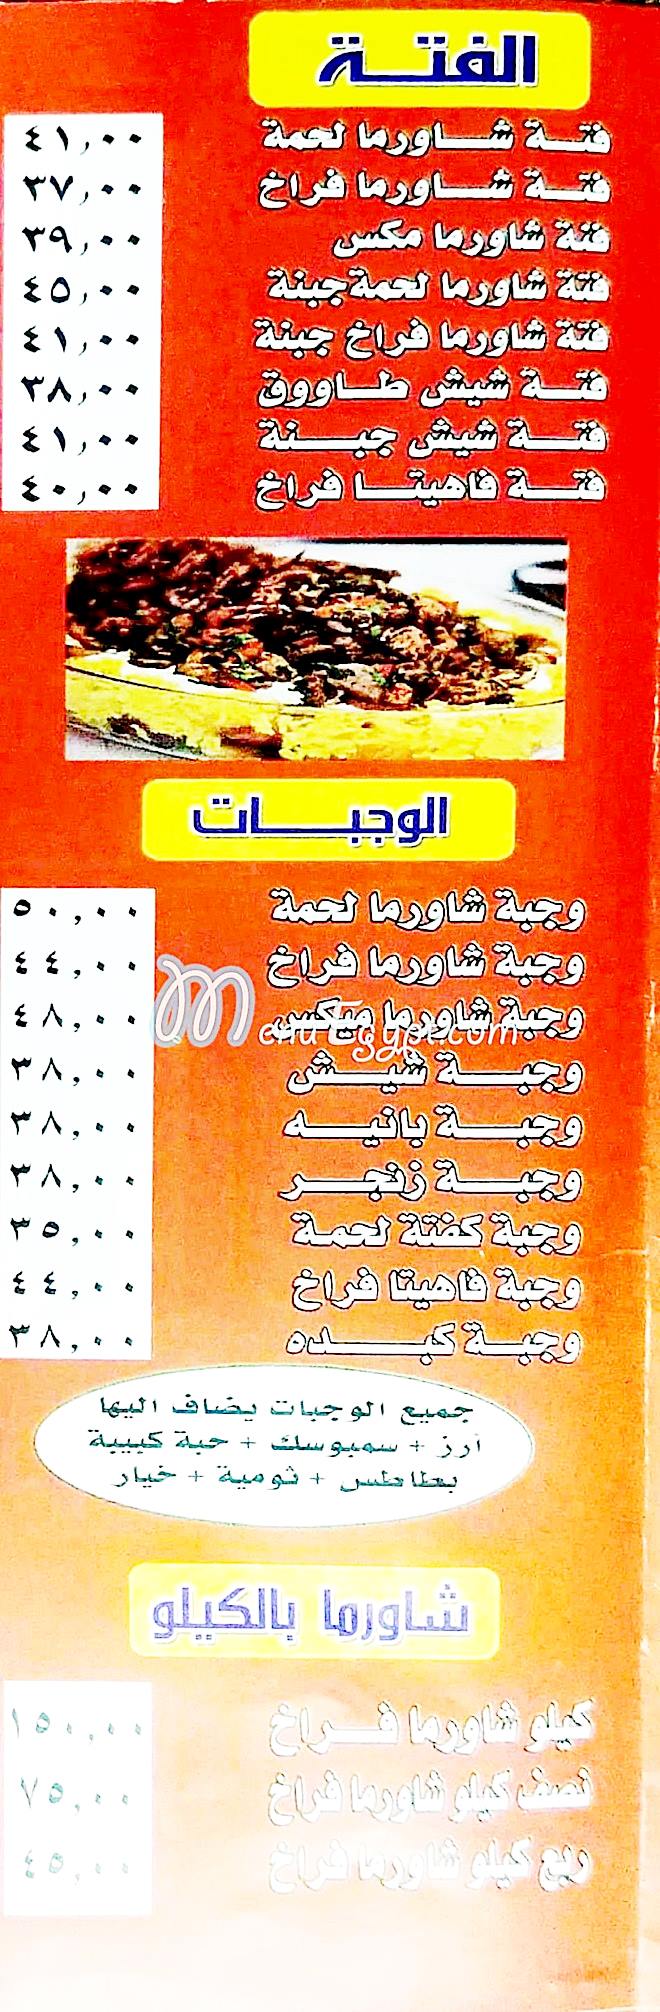 Shawarma Abu Yzn El Sory delivery menu